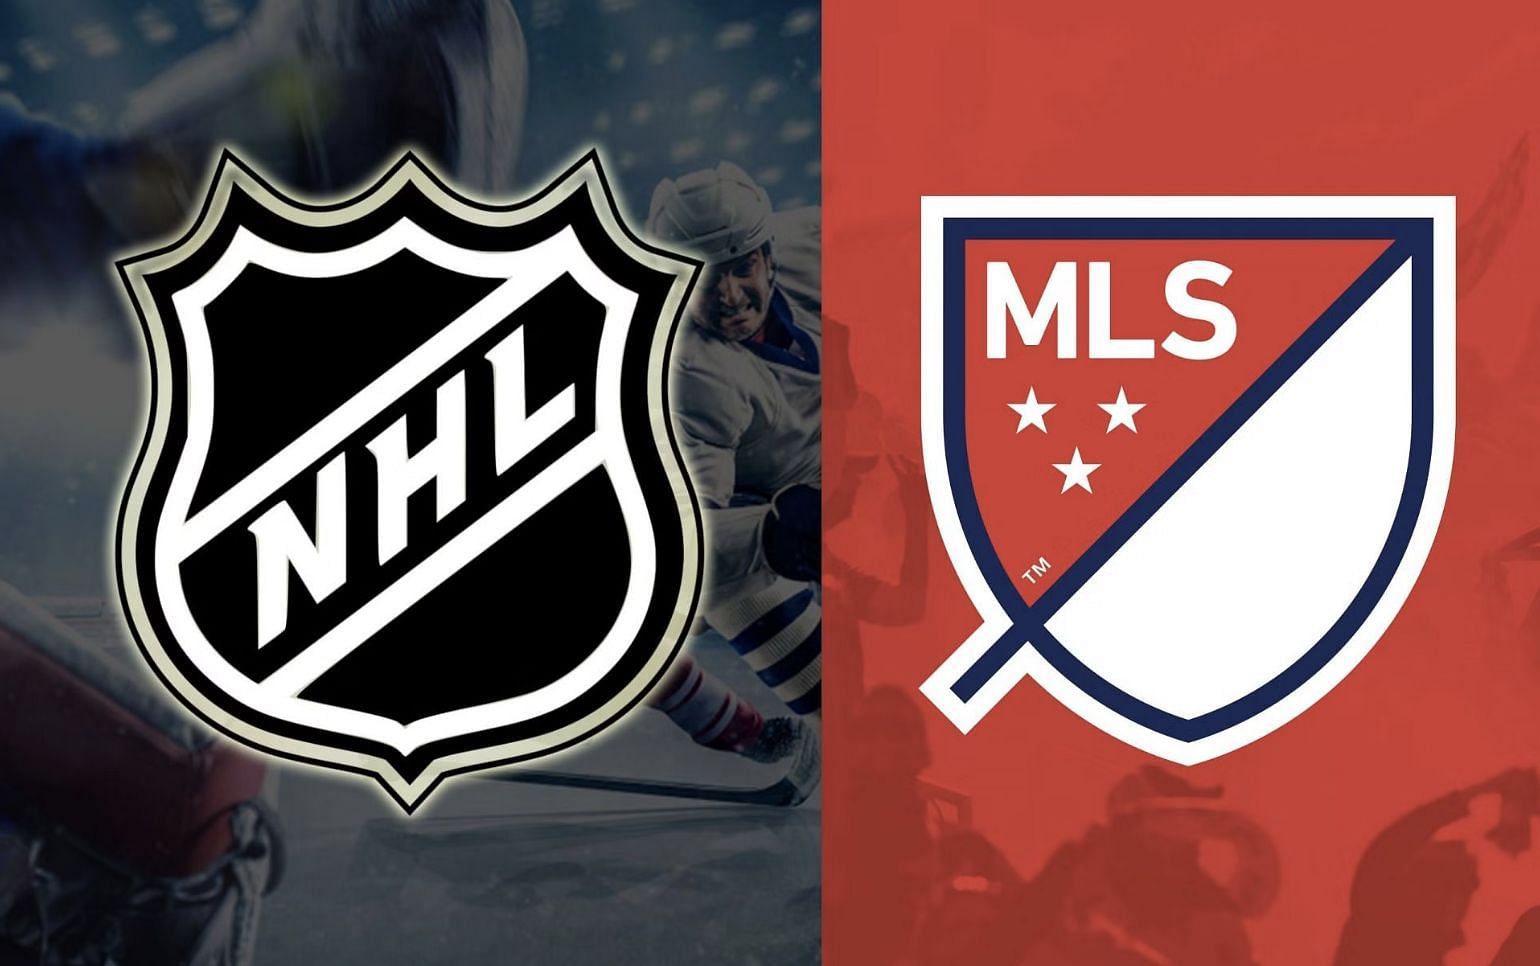 LA Kings Prez addresses concerns of MLS overtaking NHL in viewership